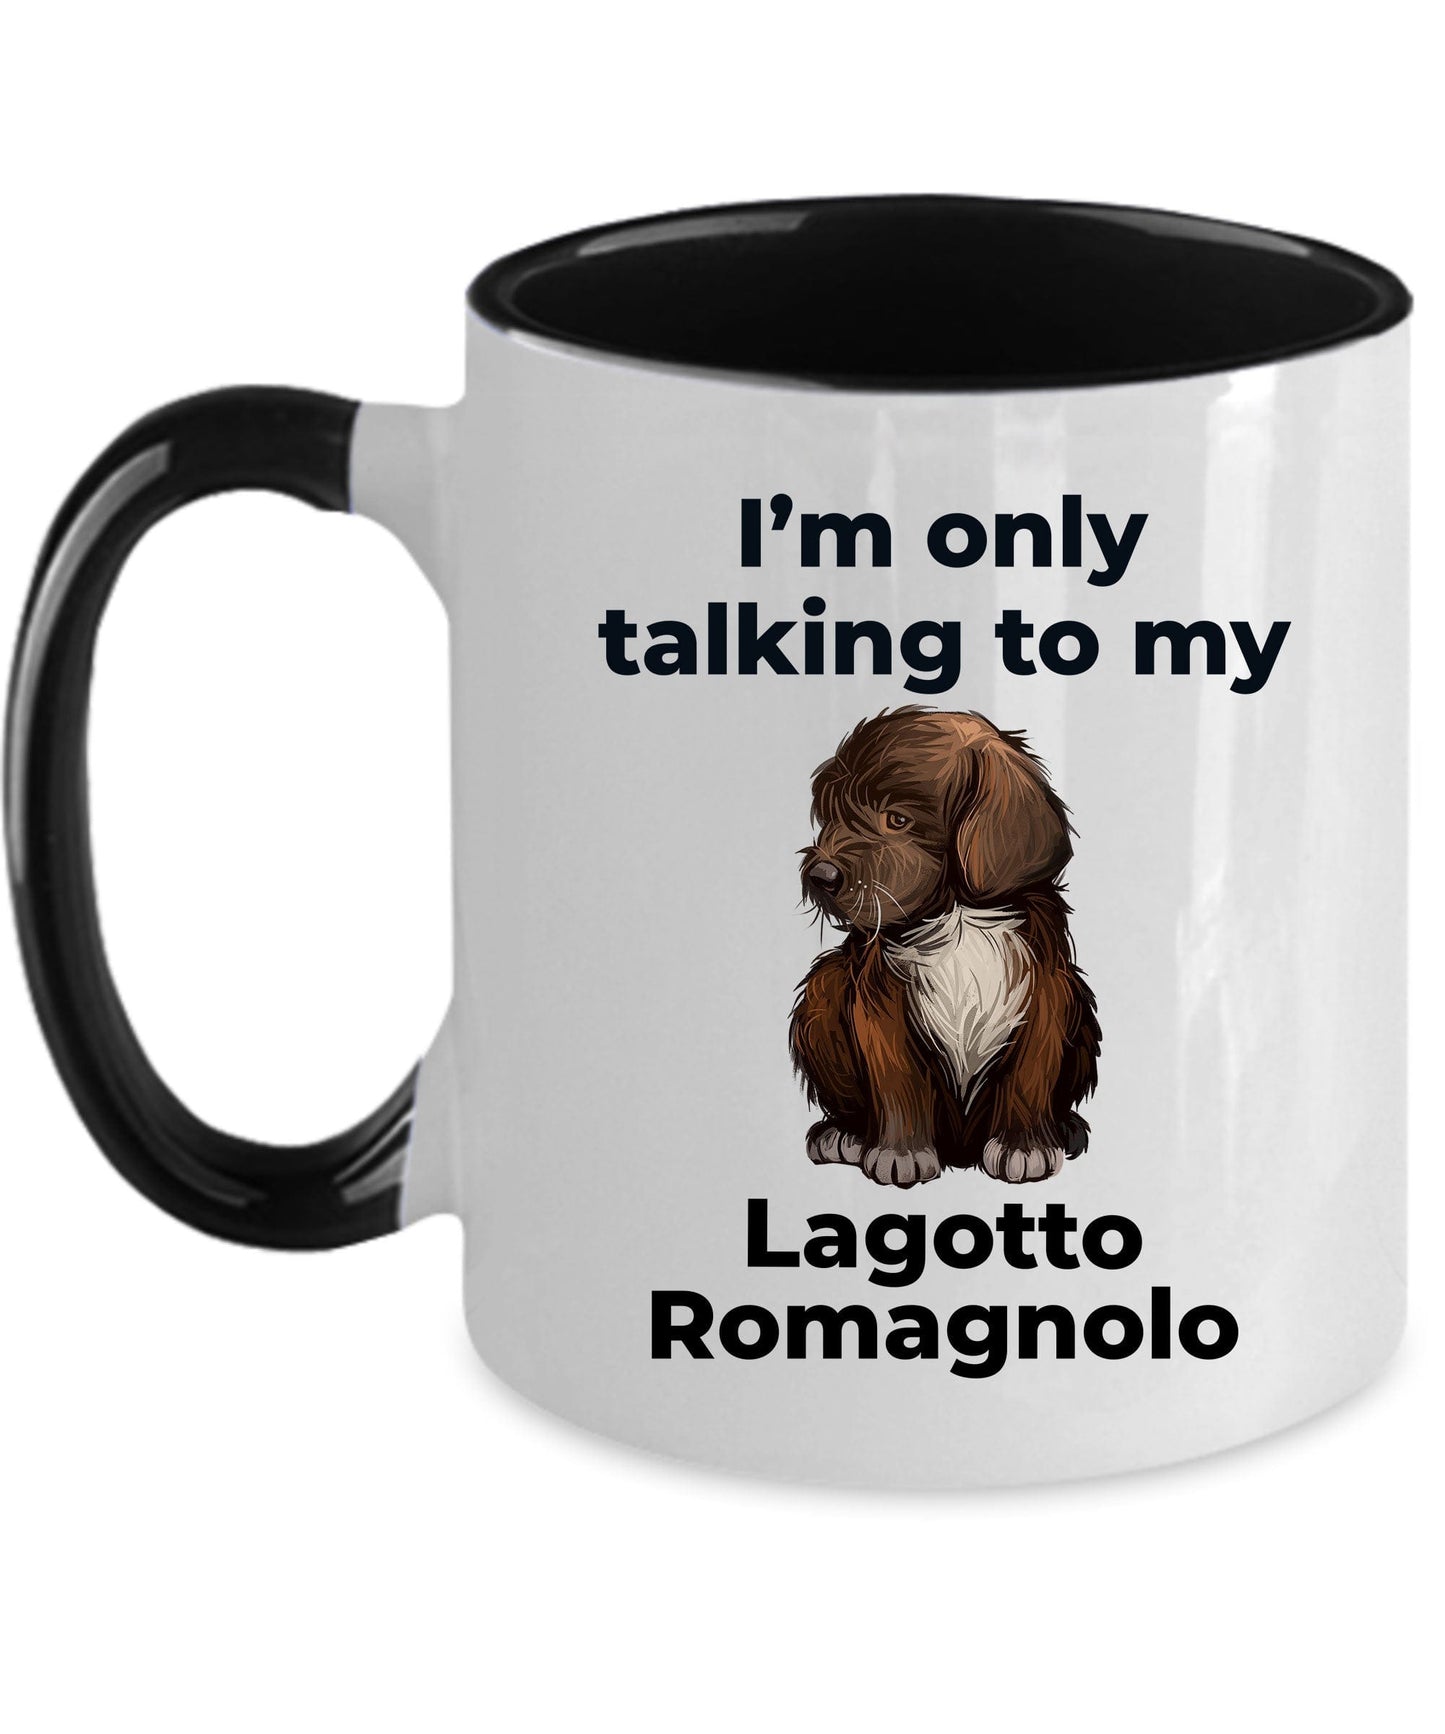 Lagotto Romagnolo Dog Funny ceramic coffee mug - I'm only talking to my Lagotto Romagnolo